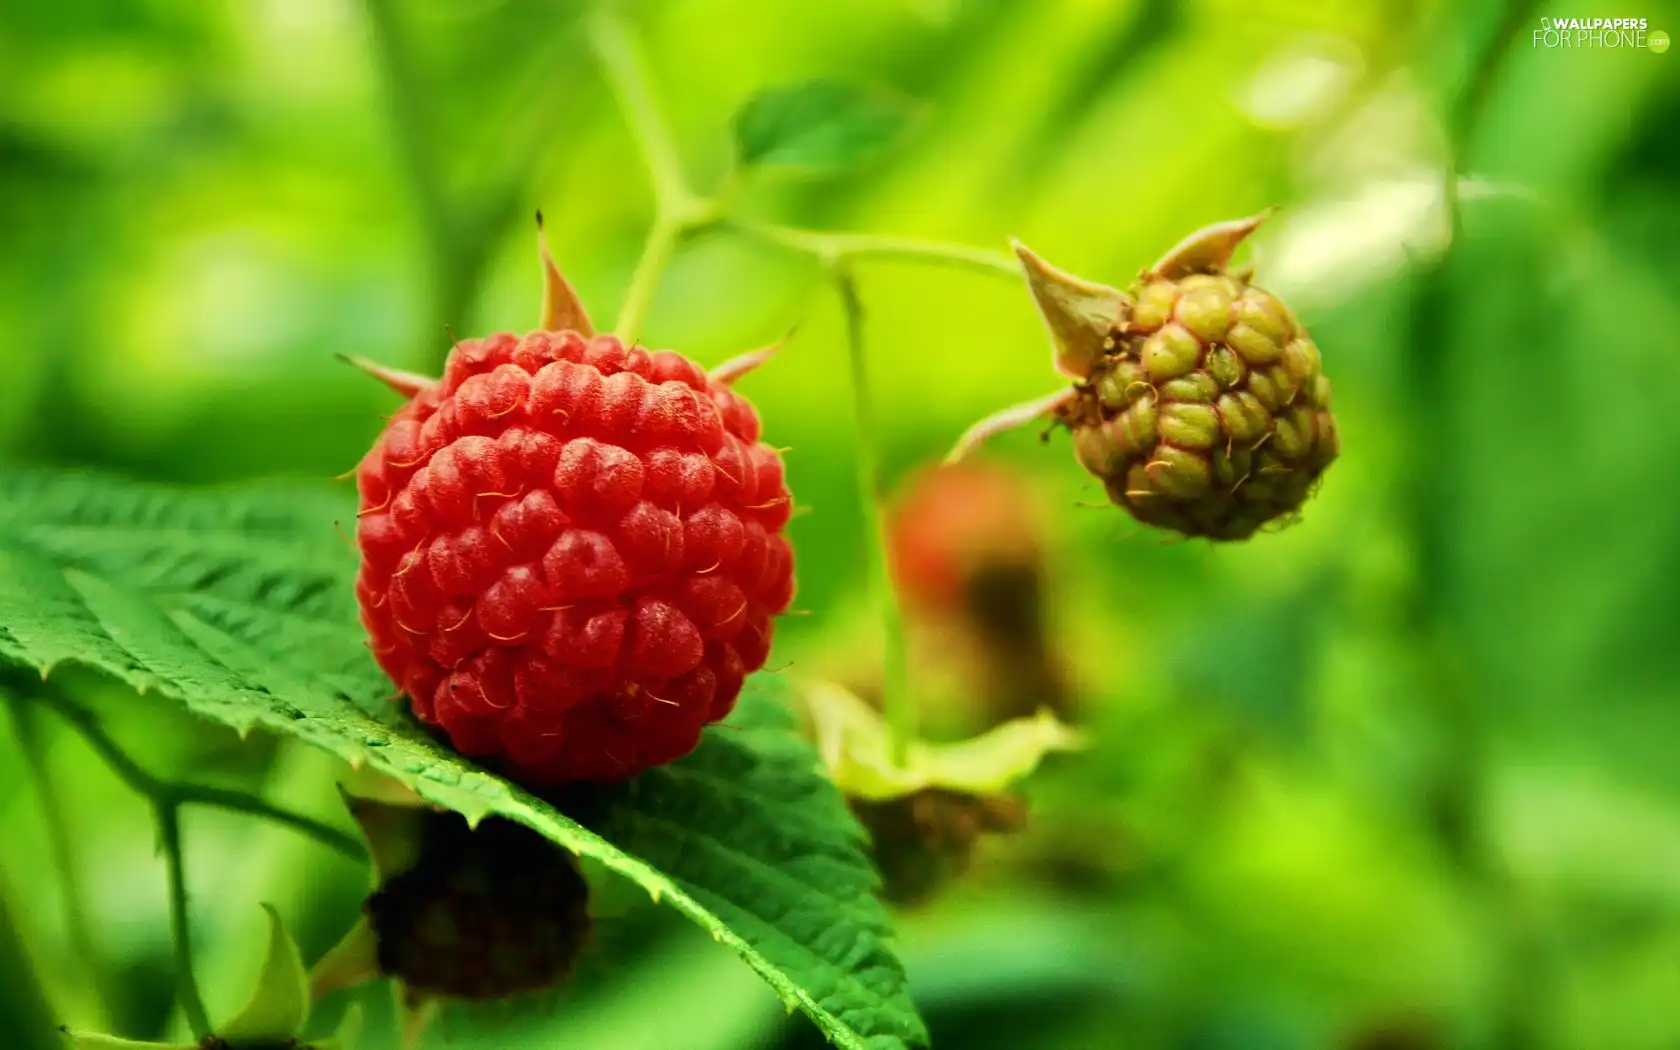 raspberries, bush